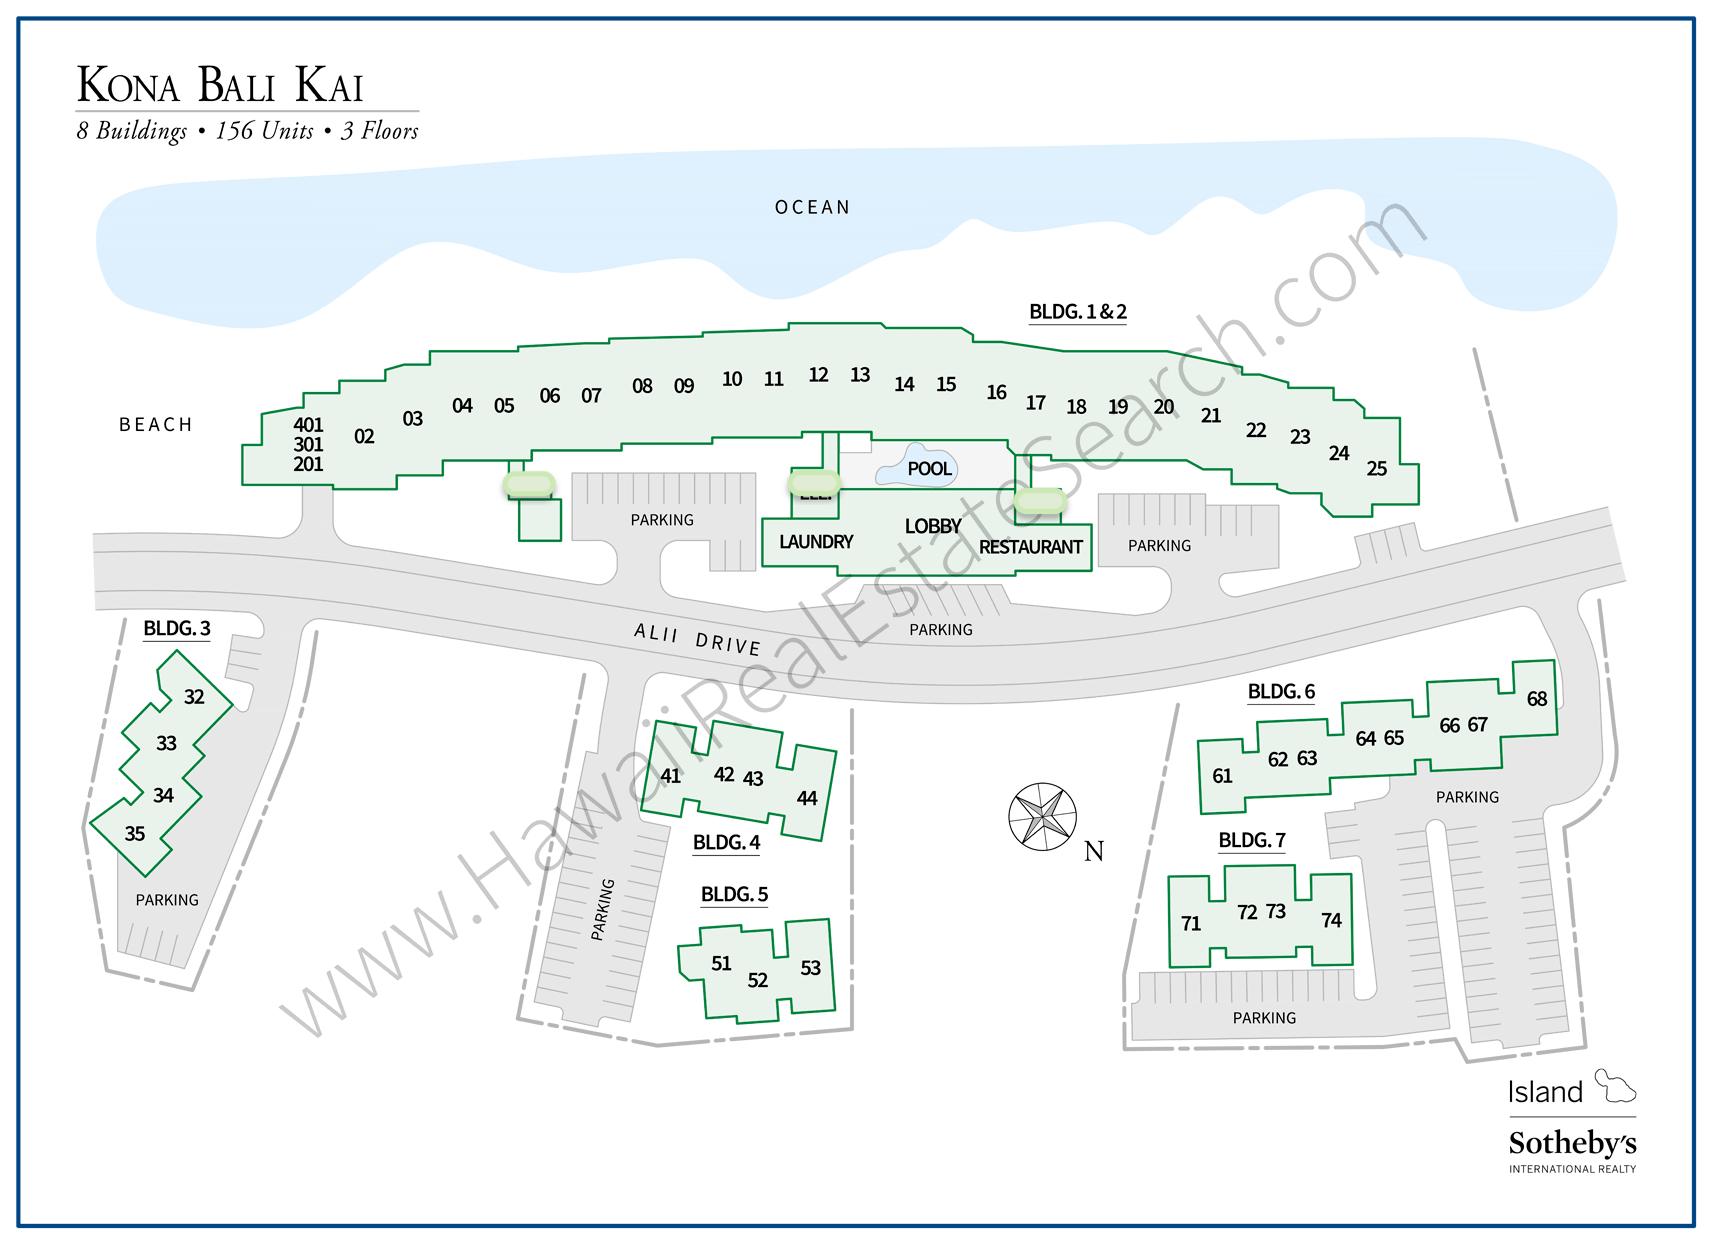 Kona Bali Kai Map Updated